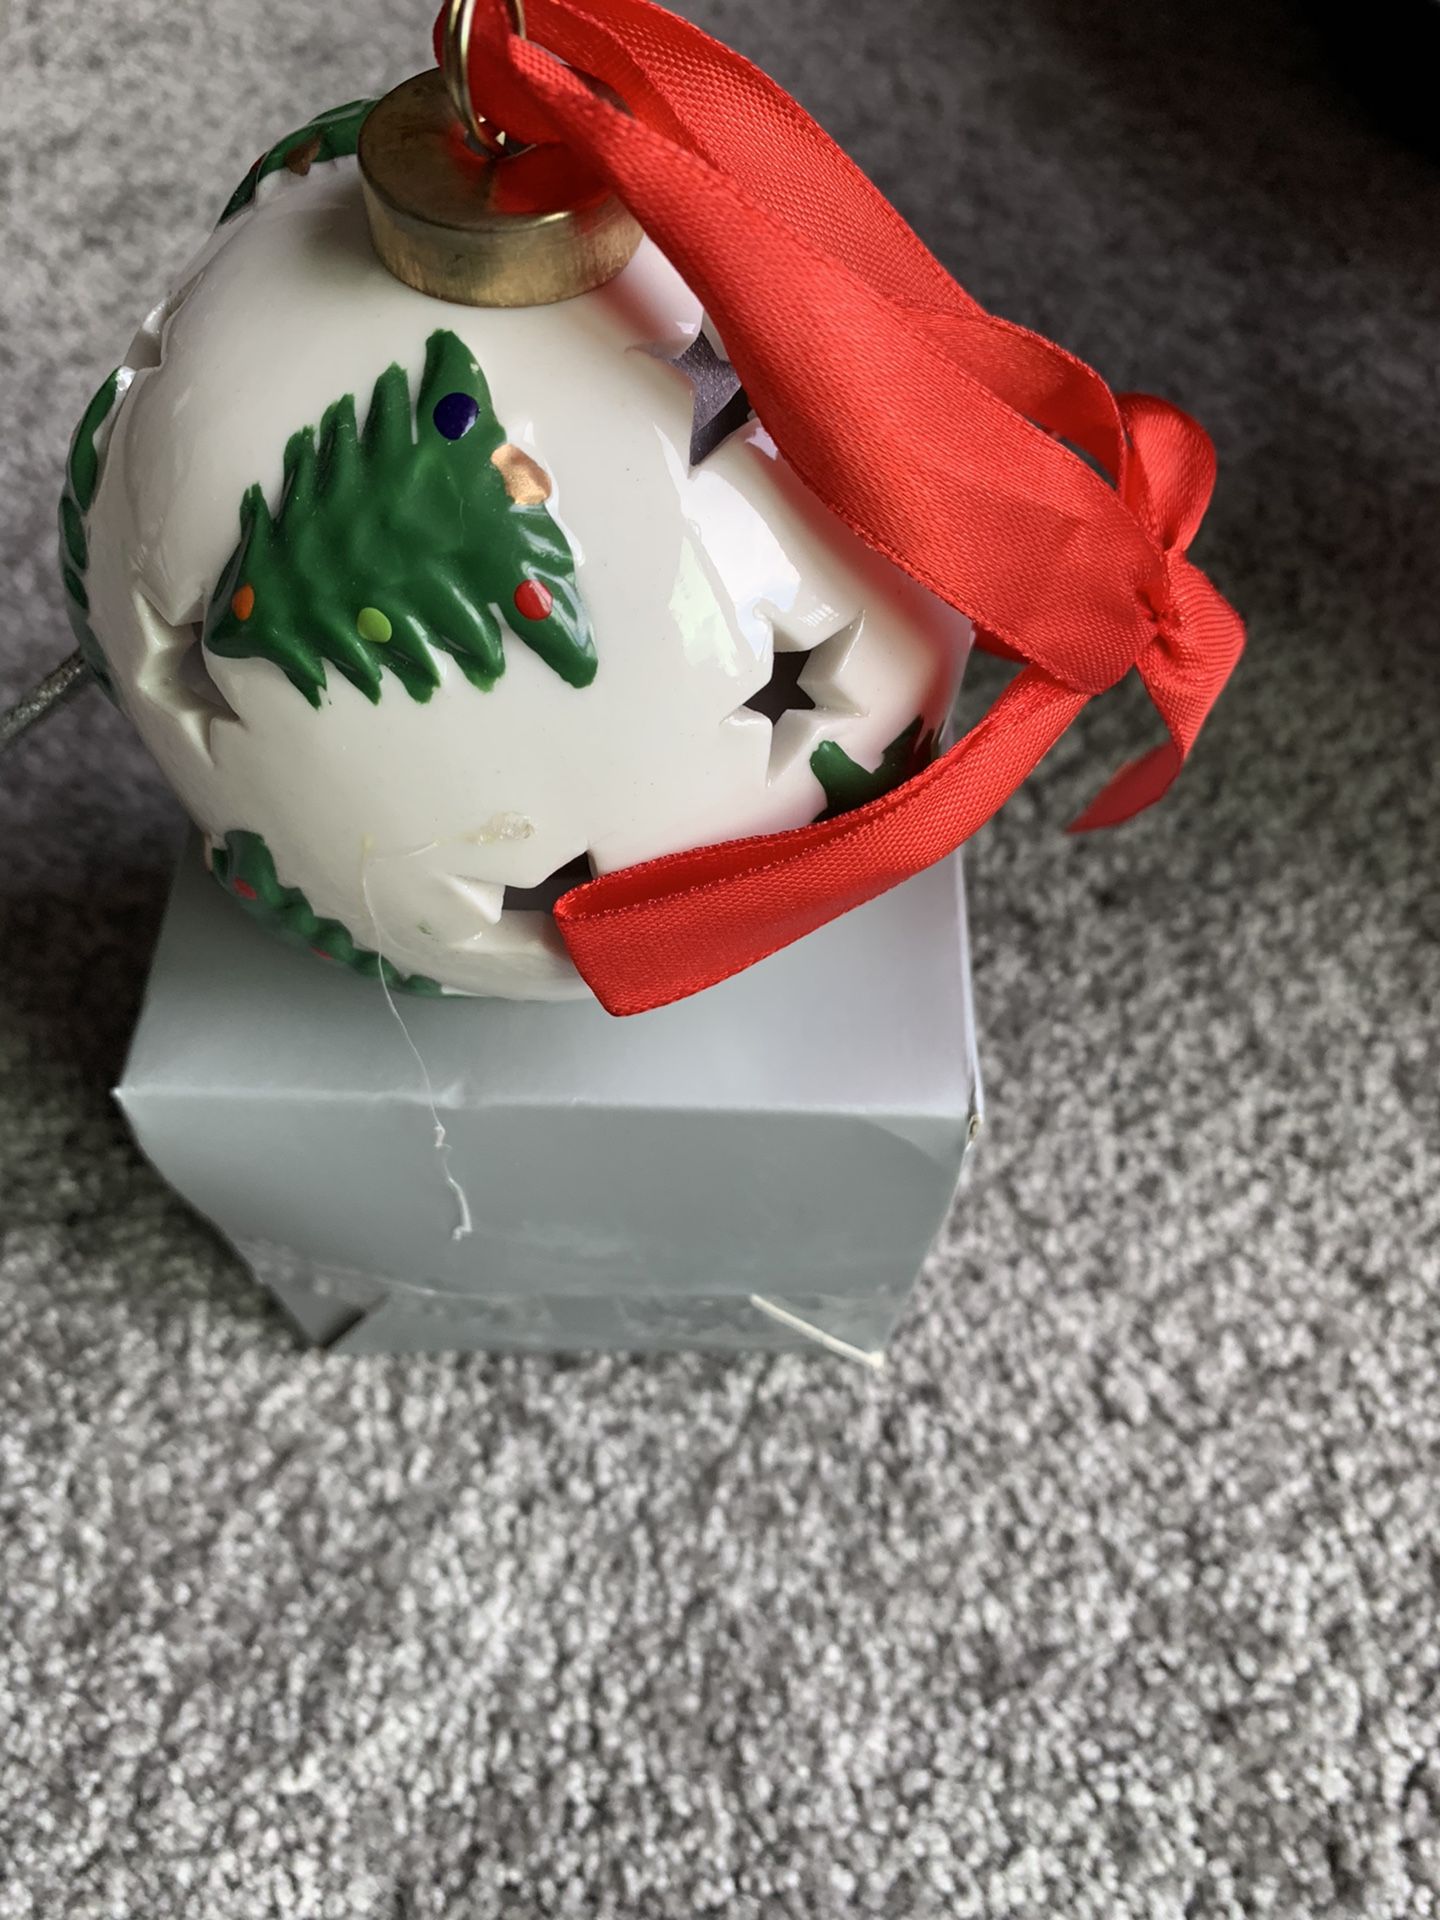 Free ceramic Christmas ornament